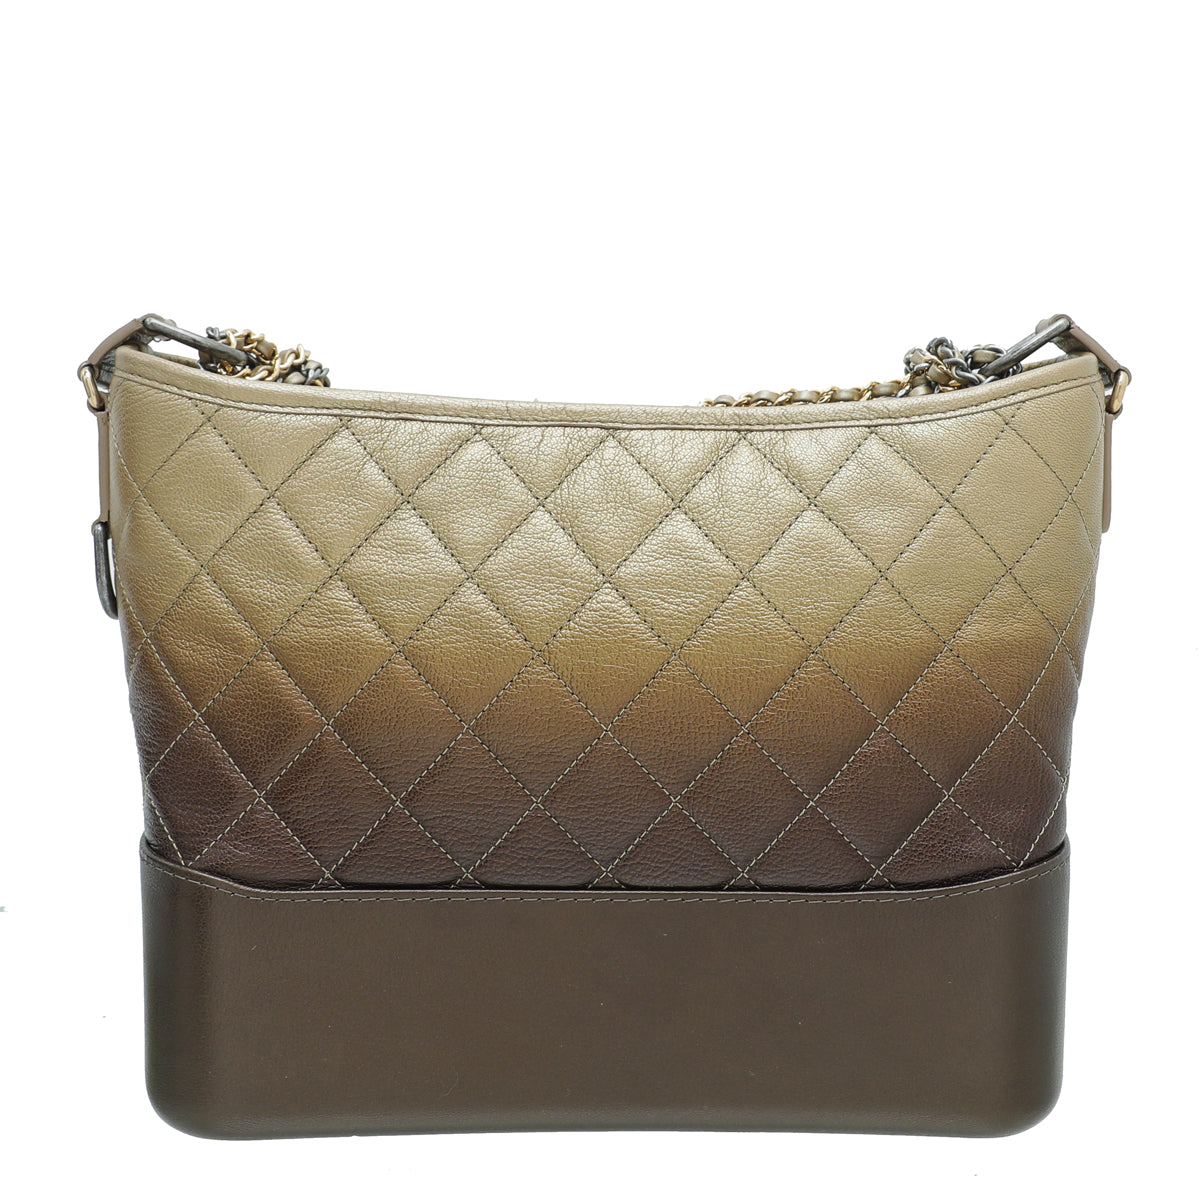 Chanel Brown Ombre Medium Bag